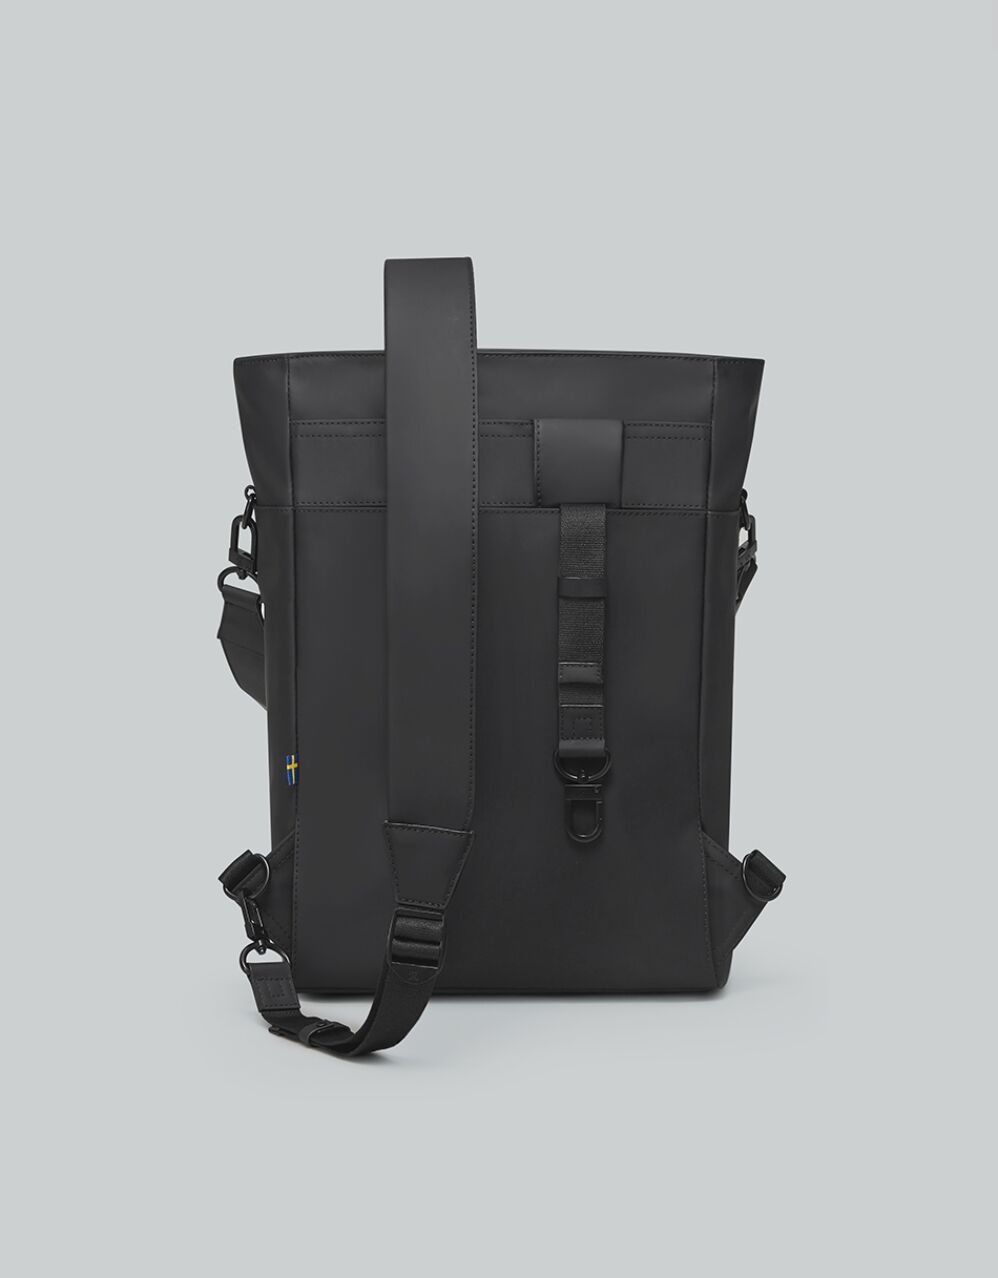 BG by baggallini Charlotte Crossbody Bag - Stylish, Lightweight,  Adjustable-Strap Purse With Multiple Pockets and RFID Protection, Black:  Handbags: Amazon.com